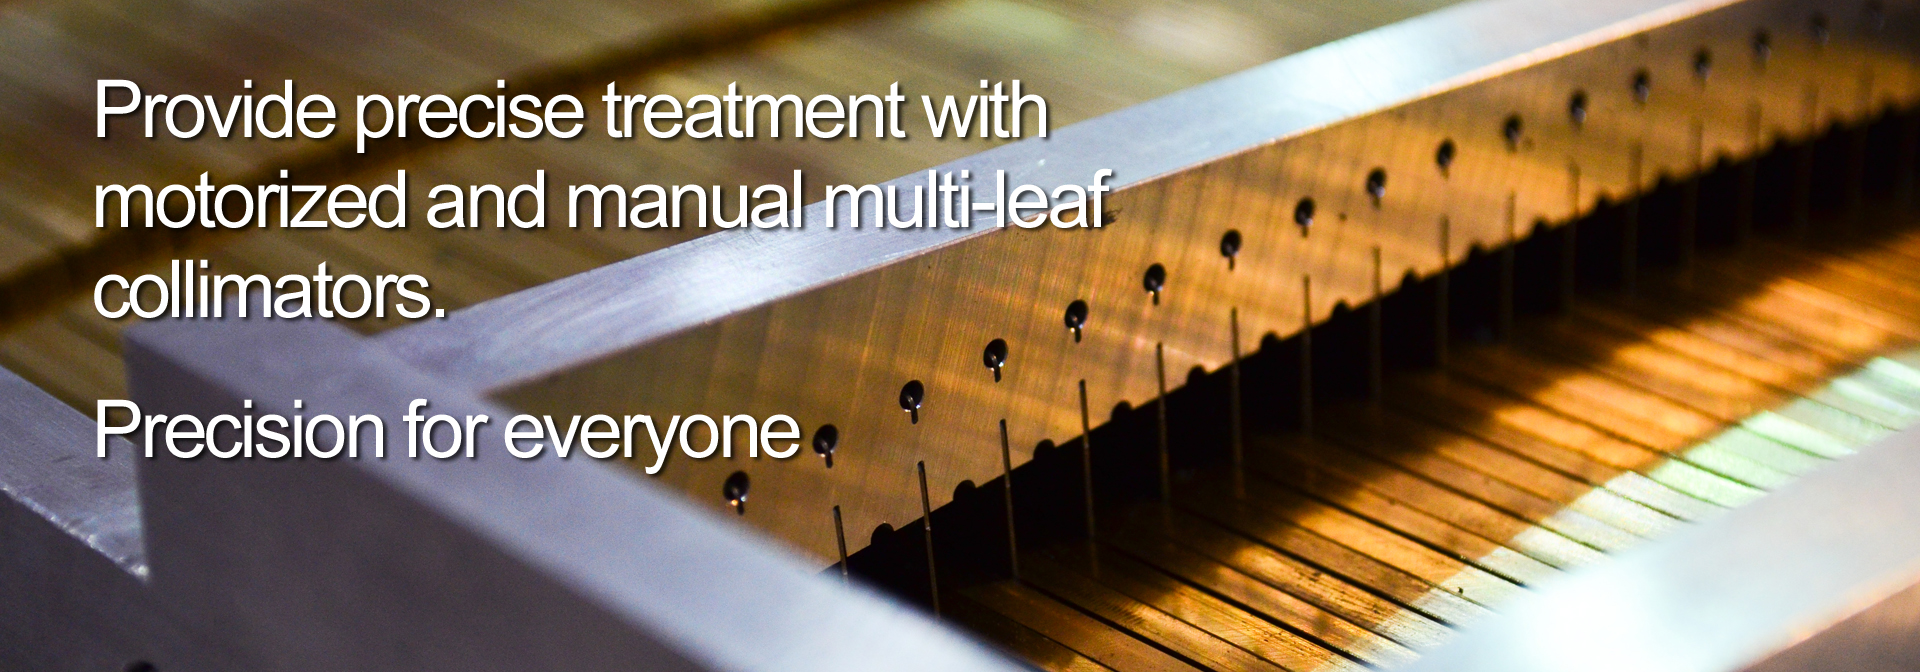 Provide precise treatment w/ motorized & manual Multi-Leaf Collimators